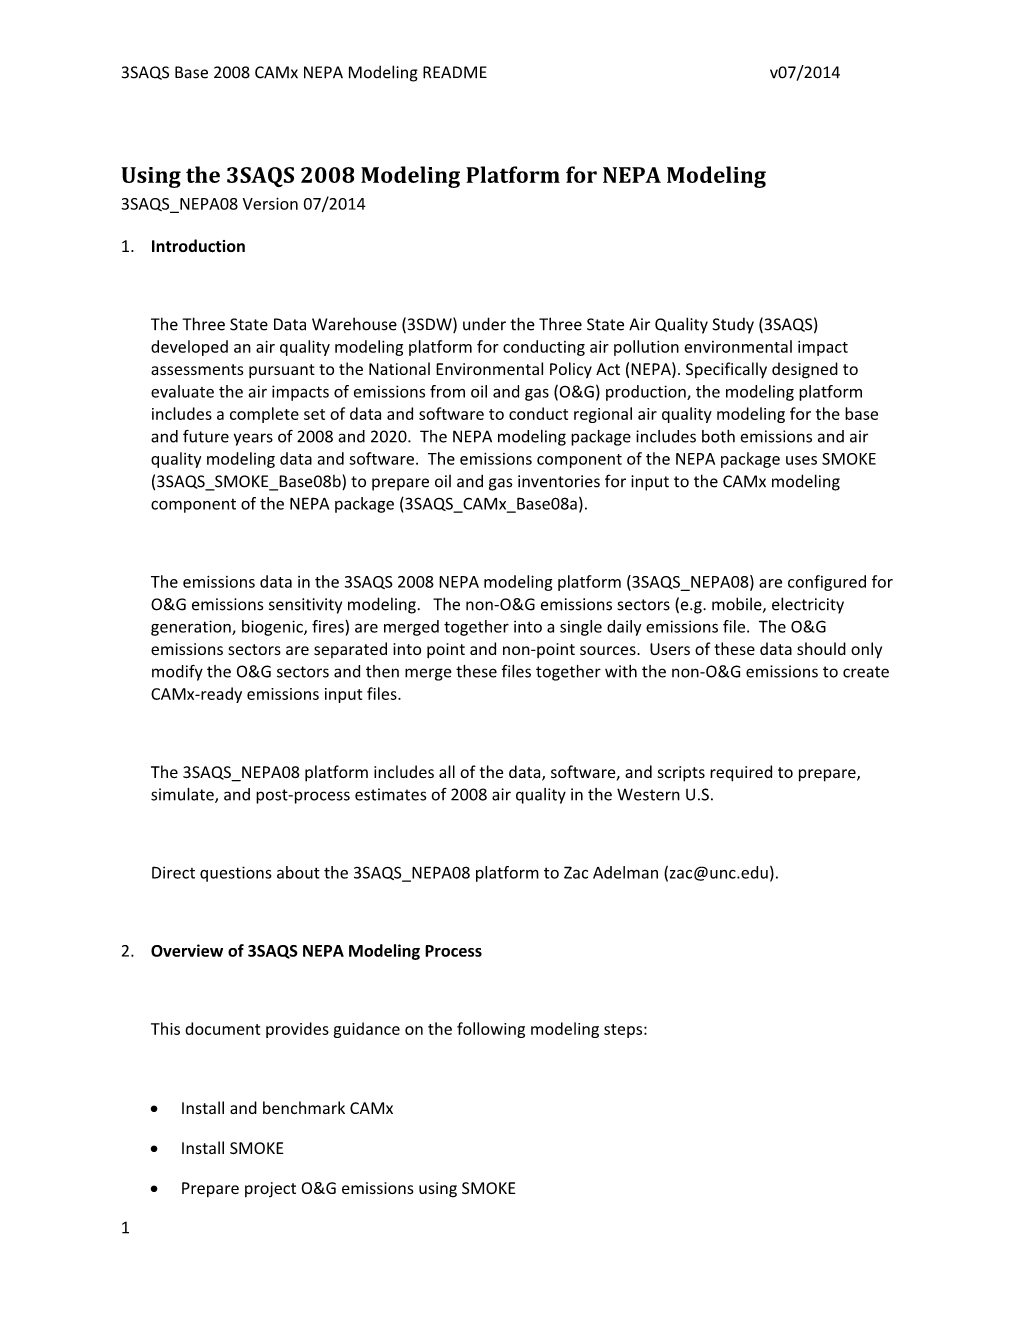 Using the 3SAQS 2008 Modeling Platform for NEPA Modeling